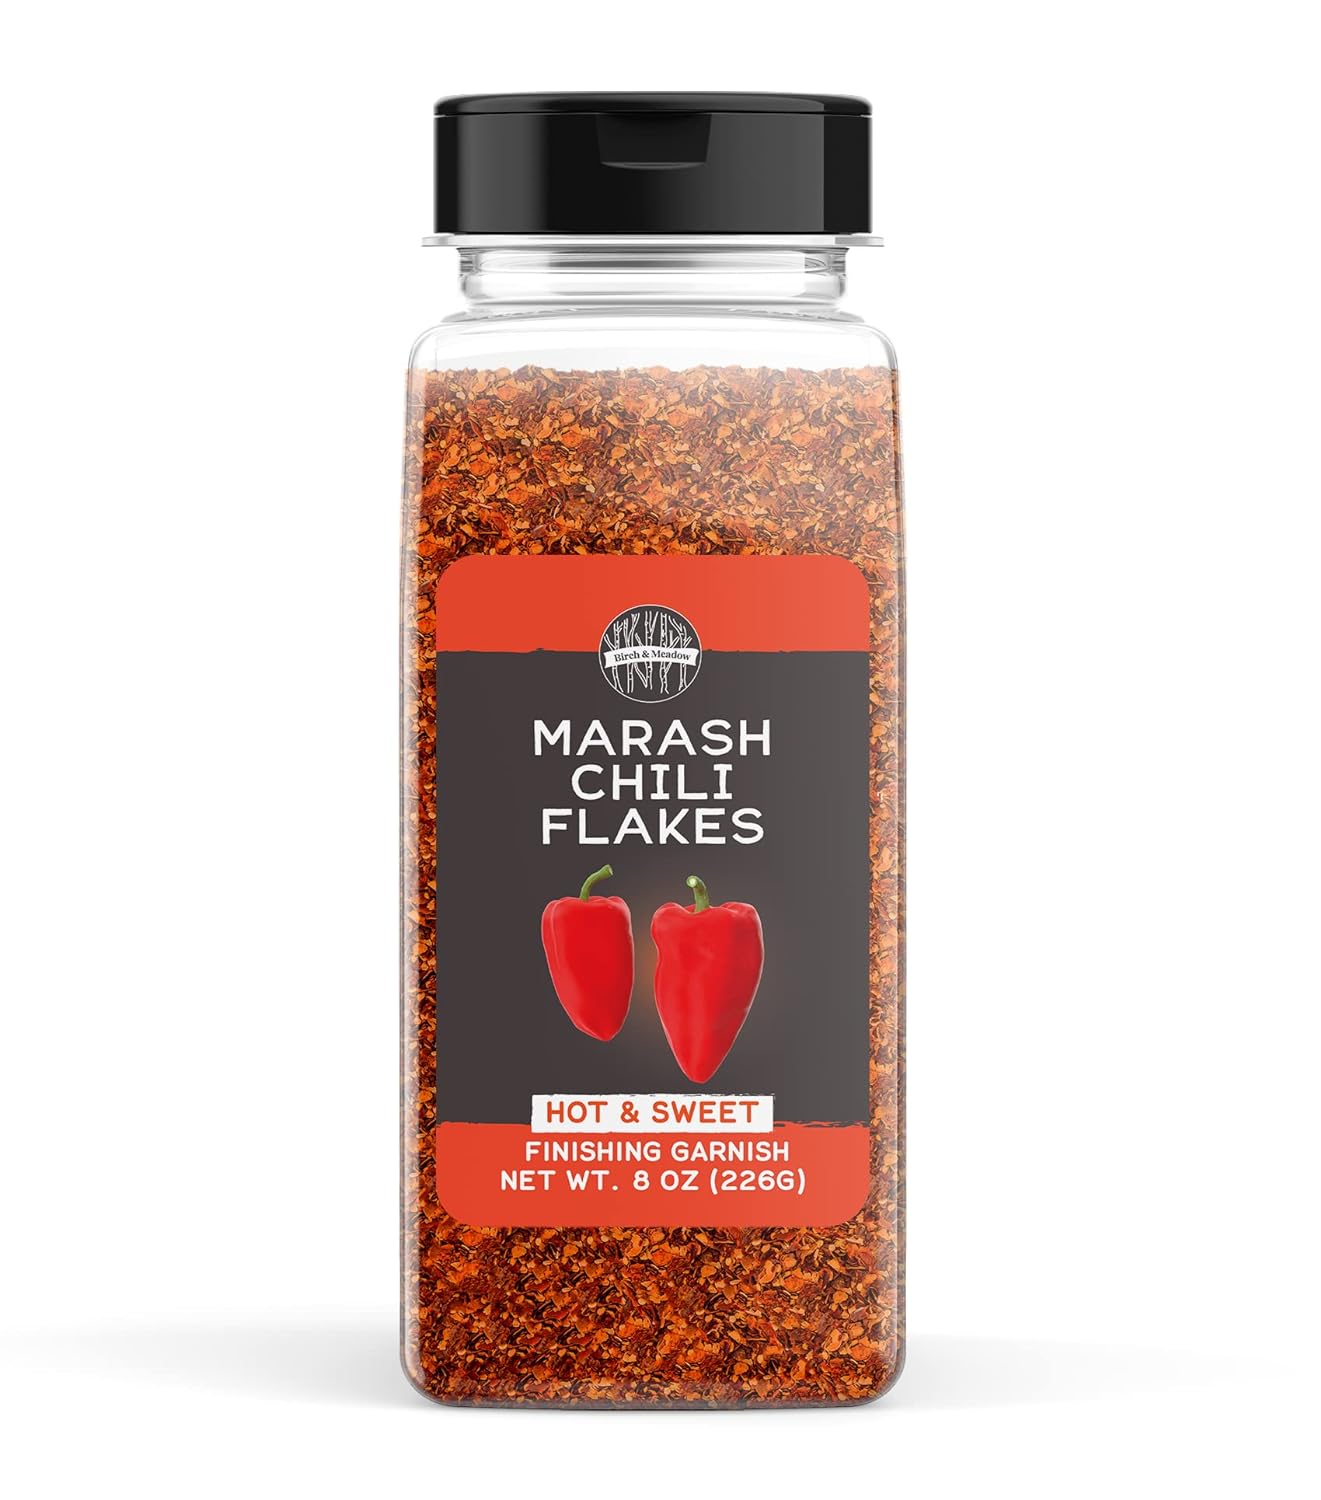 Birch & Meadow 8 oz of Marash Chile Flakes, Hot & Sweet, Finishing Garnish